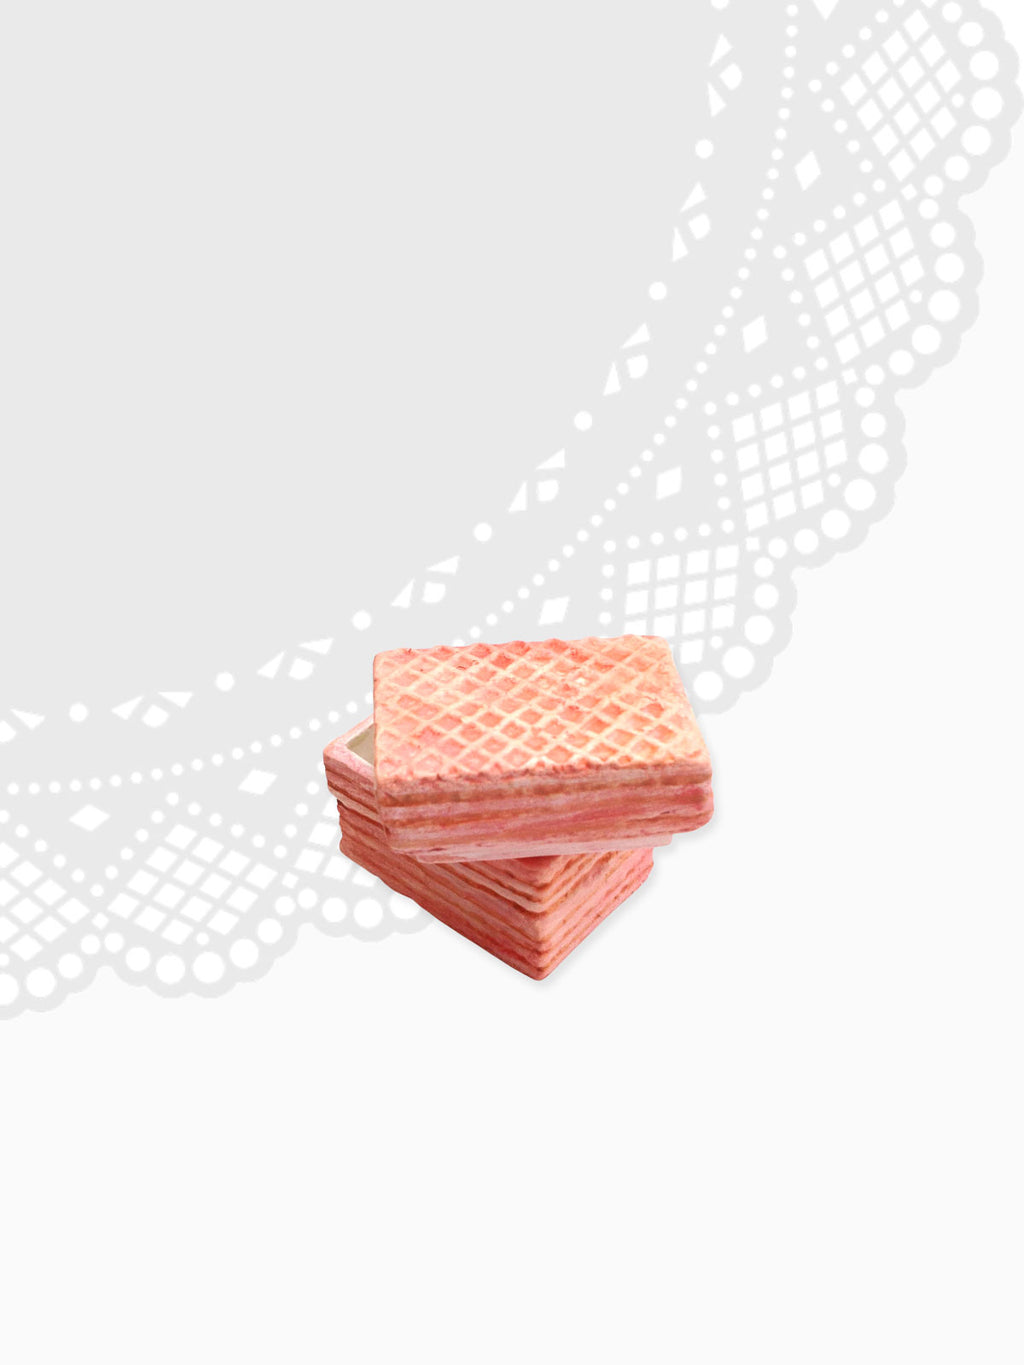 Ceramic Trinket Box - Pink Wafer Biscuit